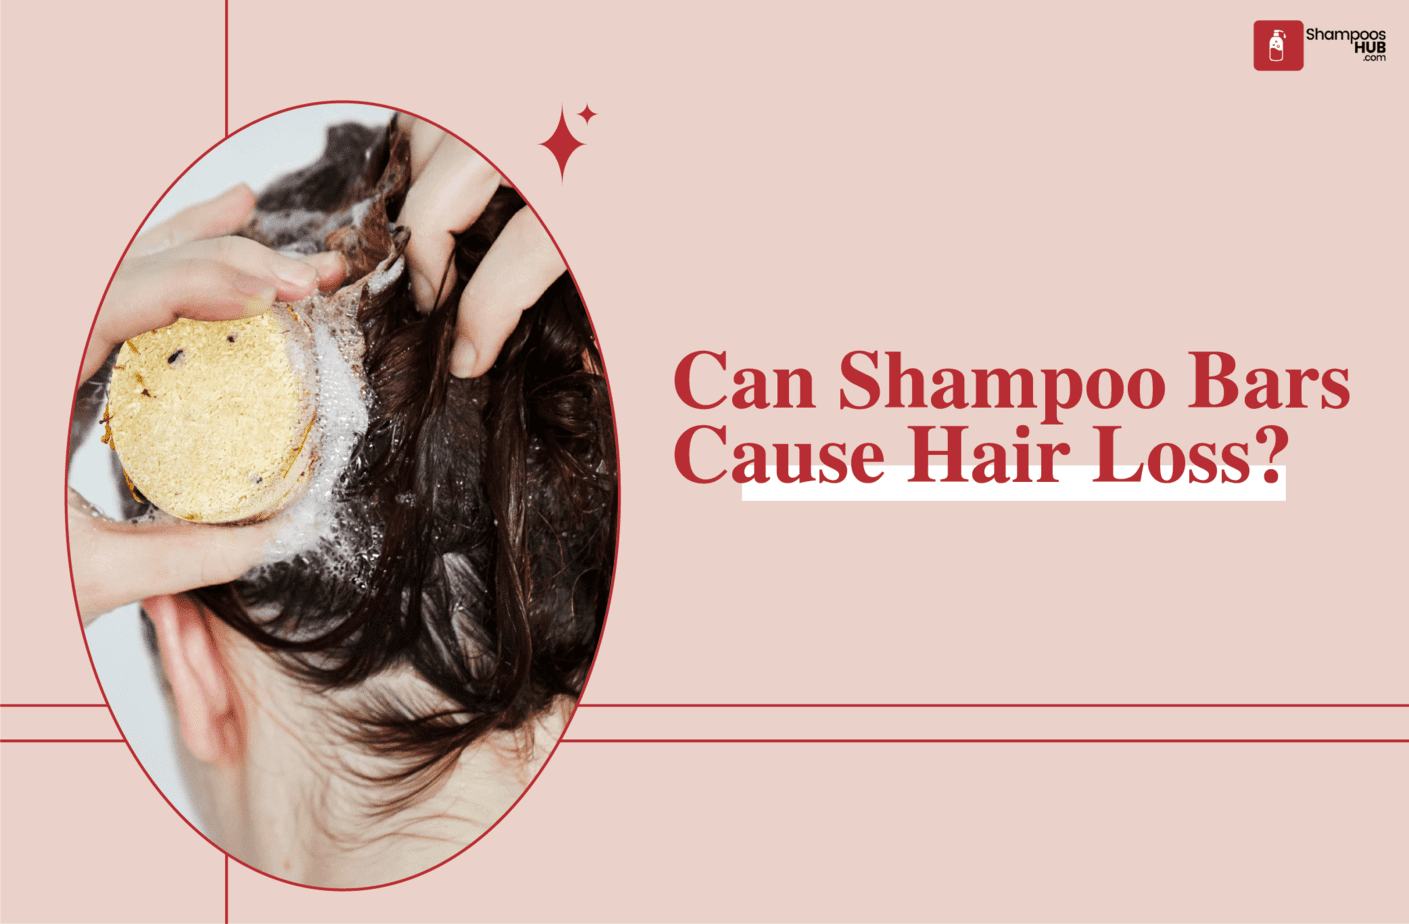 Can Shampoo Bars Cause Hair Loss?